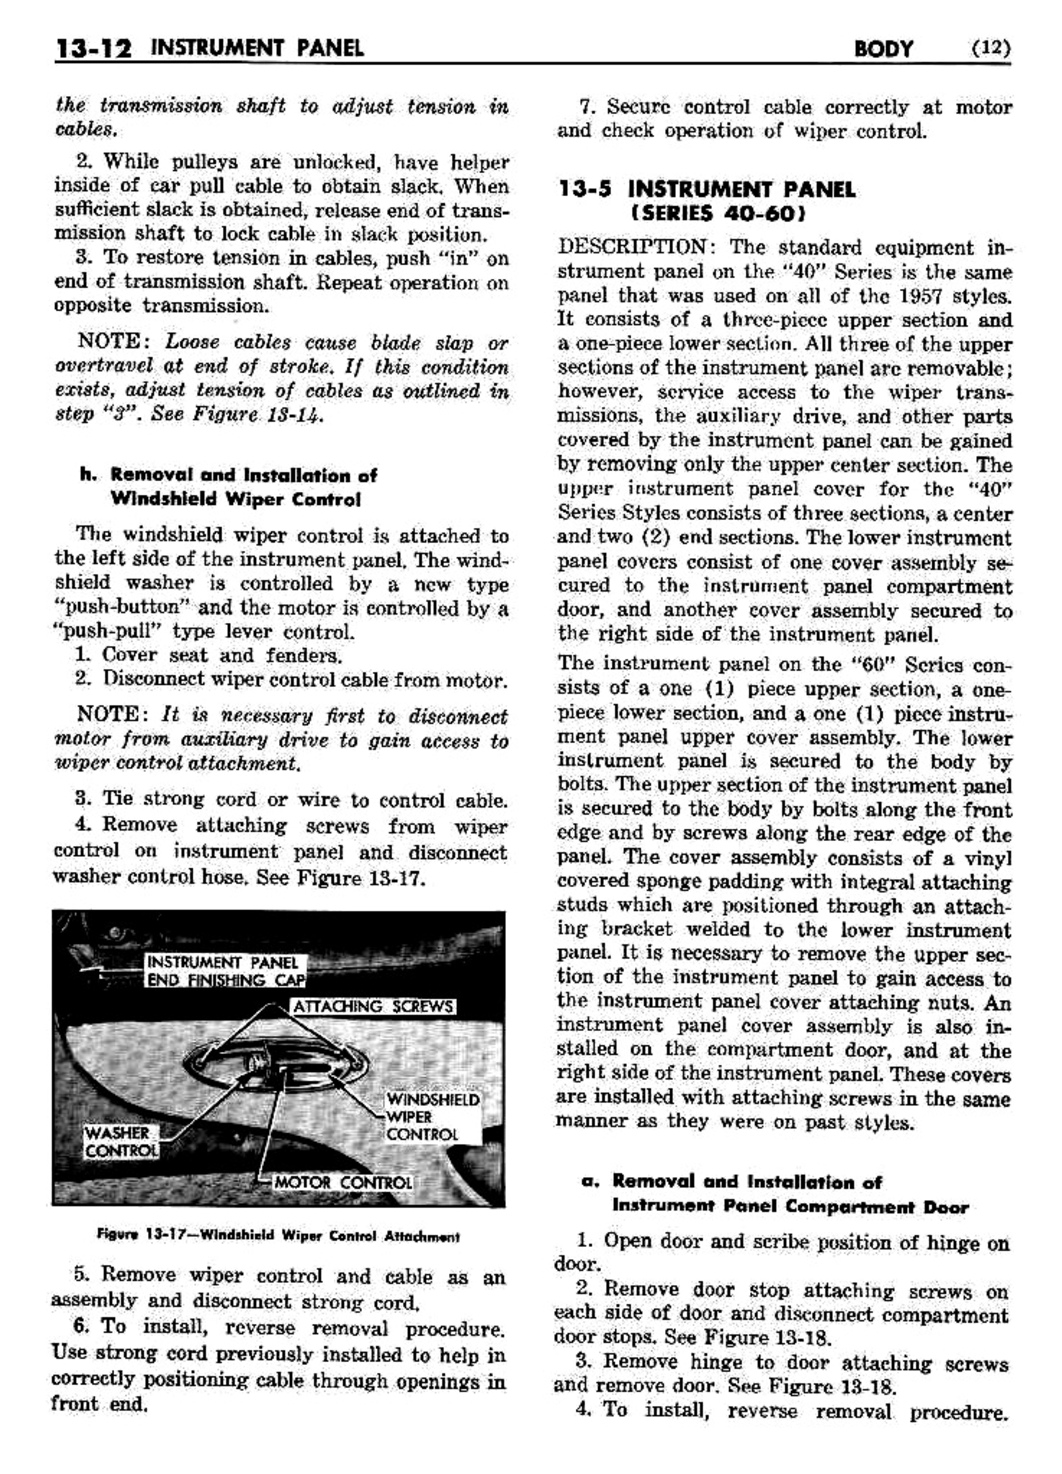 n_1958 Buick Body Service Manual-013-013.jpg